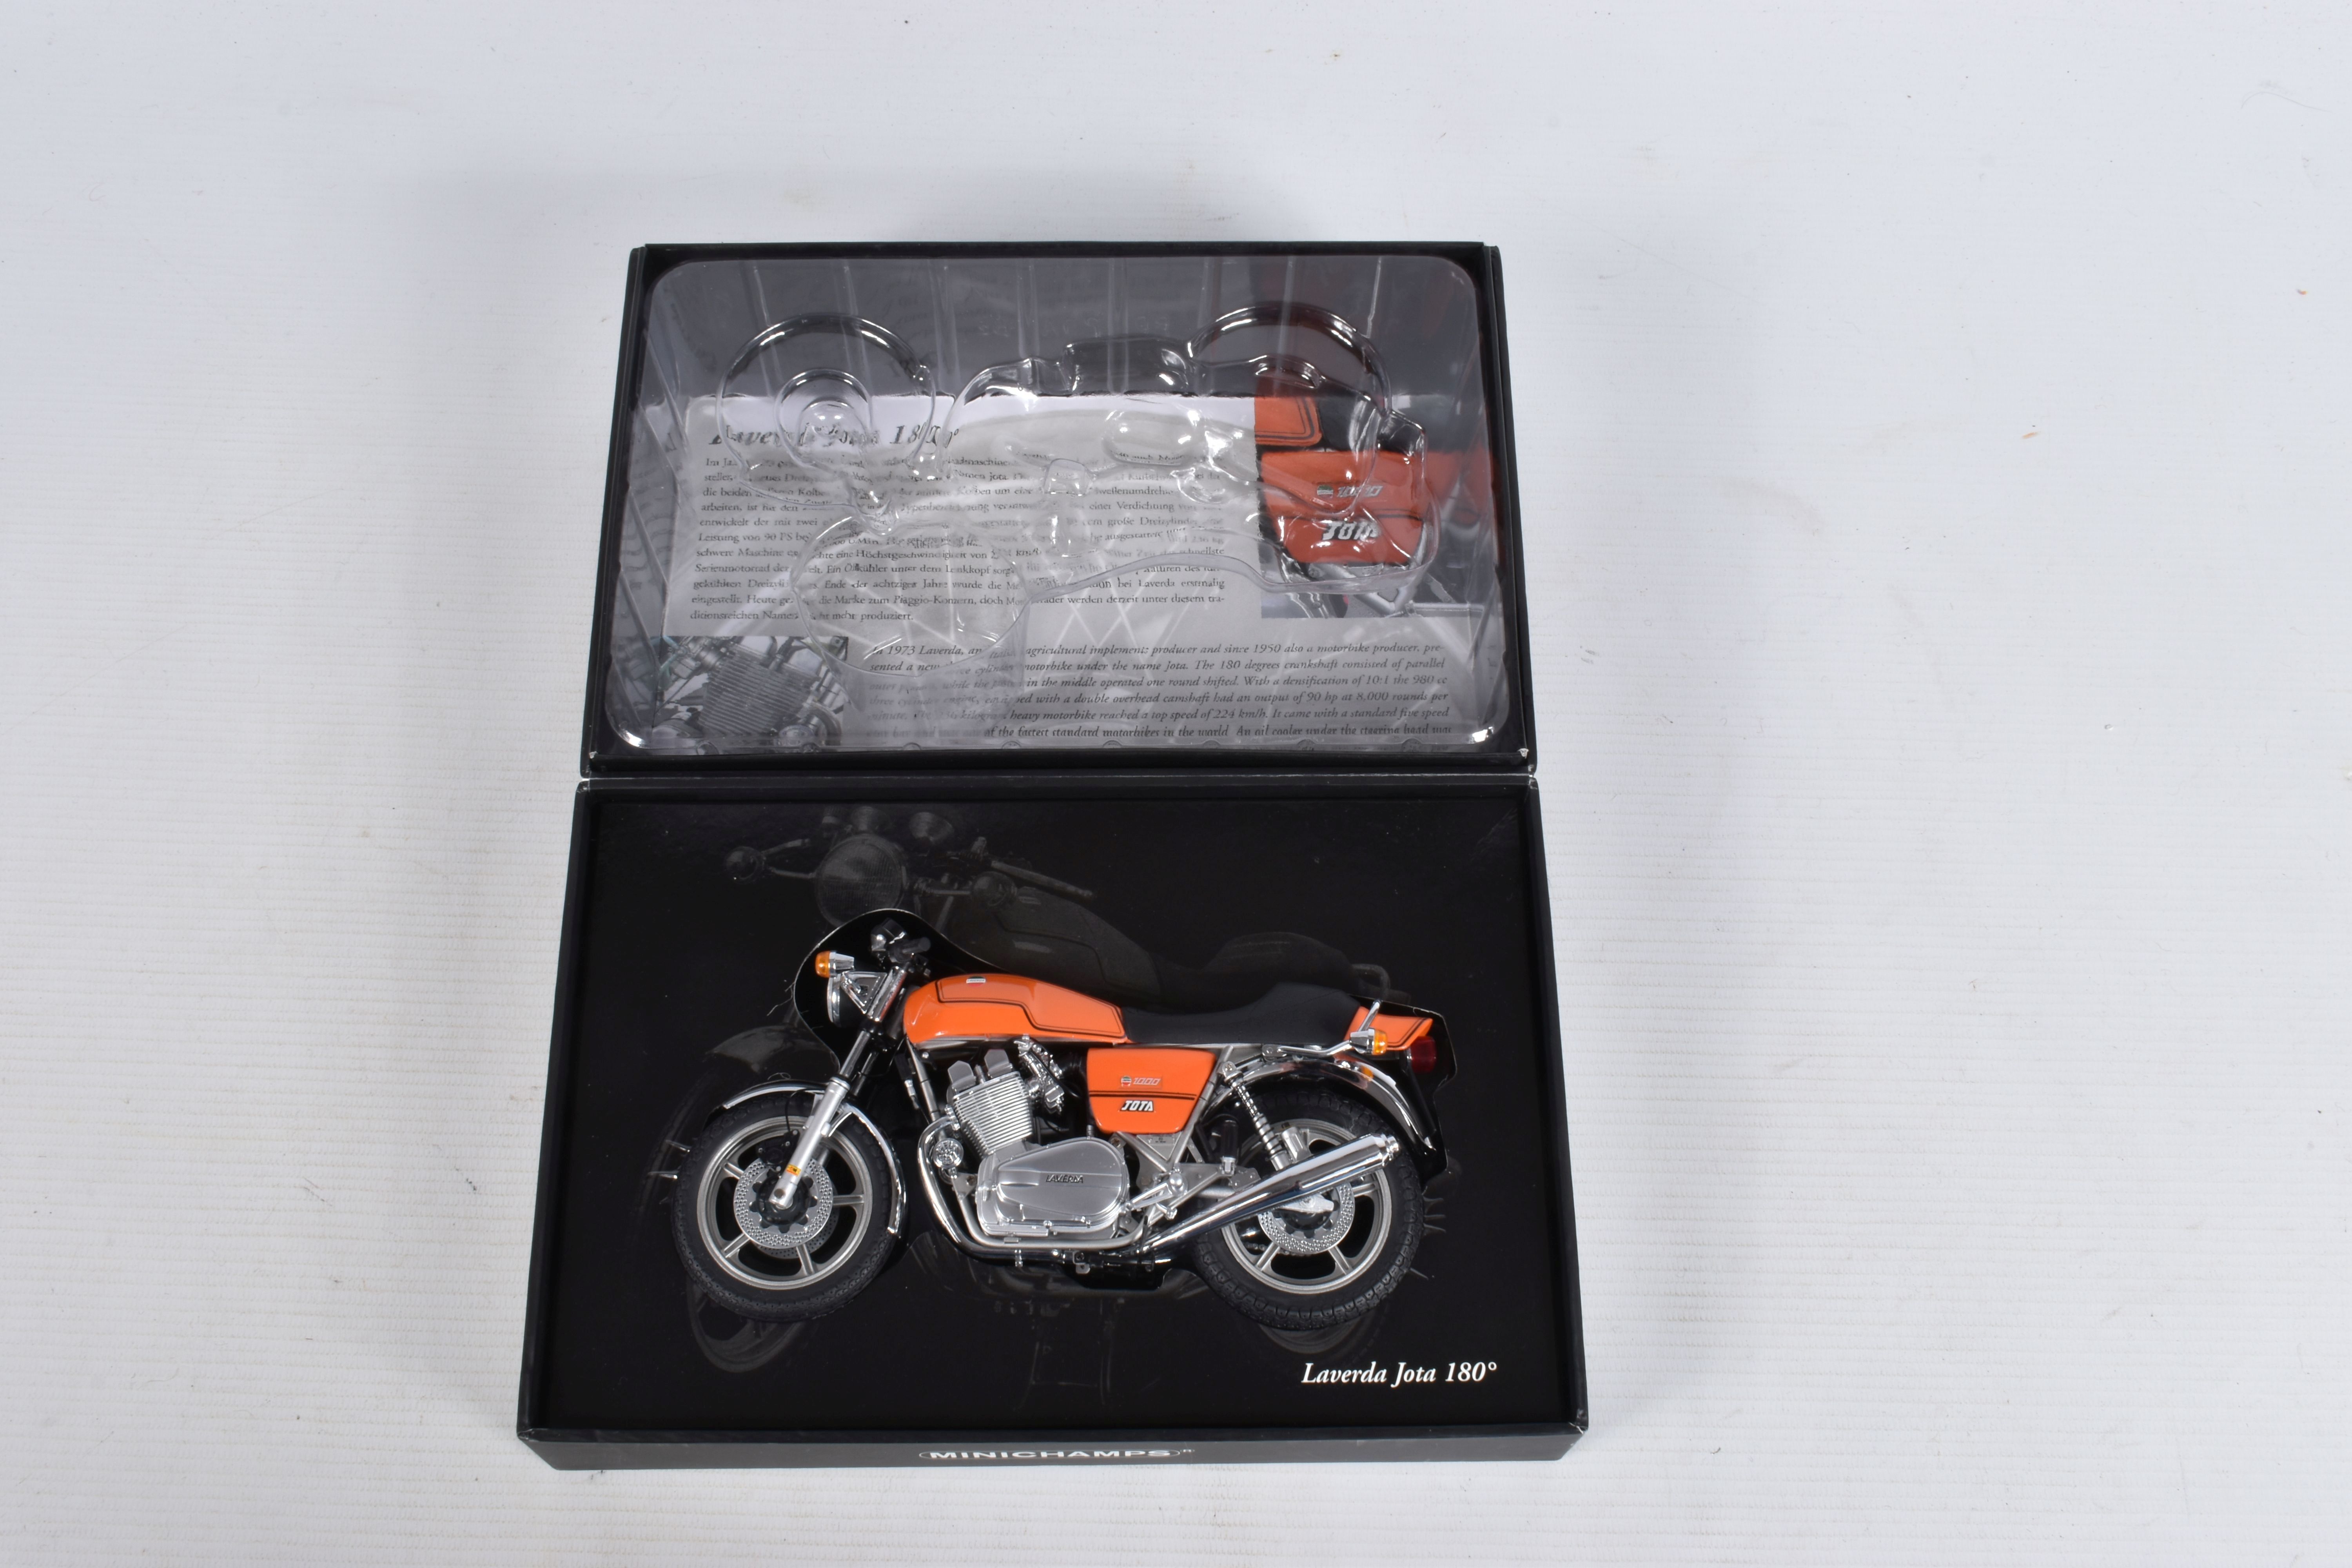 TWO BOXED MINICHAMPS PAULS MODEL ART CLASSIC BIKE SERIES 1:12 MODEL MOTORBIKES, a Laverda Jota 180 - Image 11 of 13